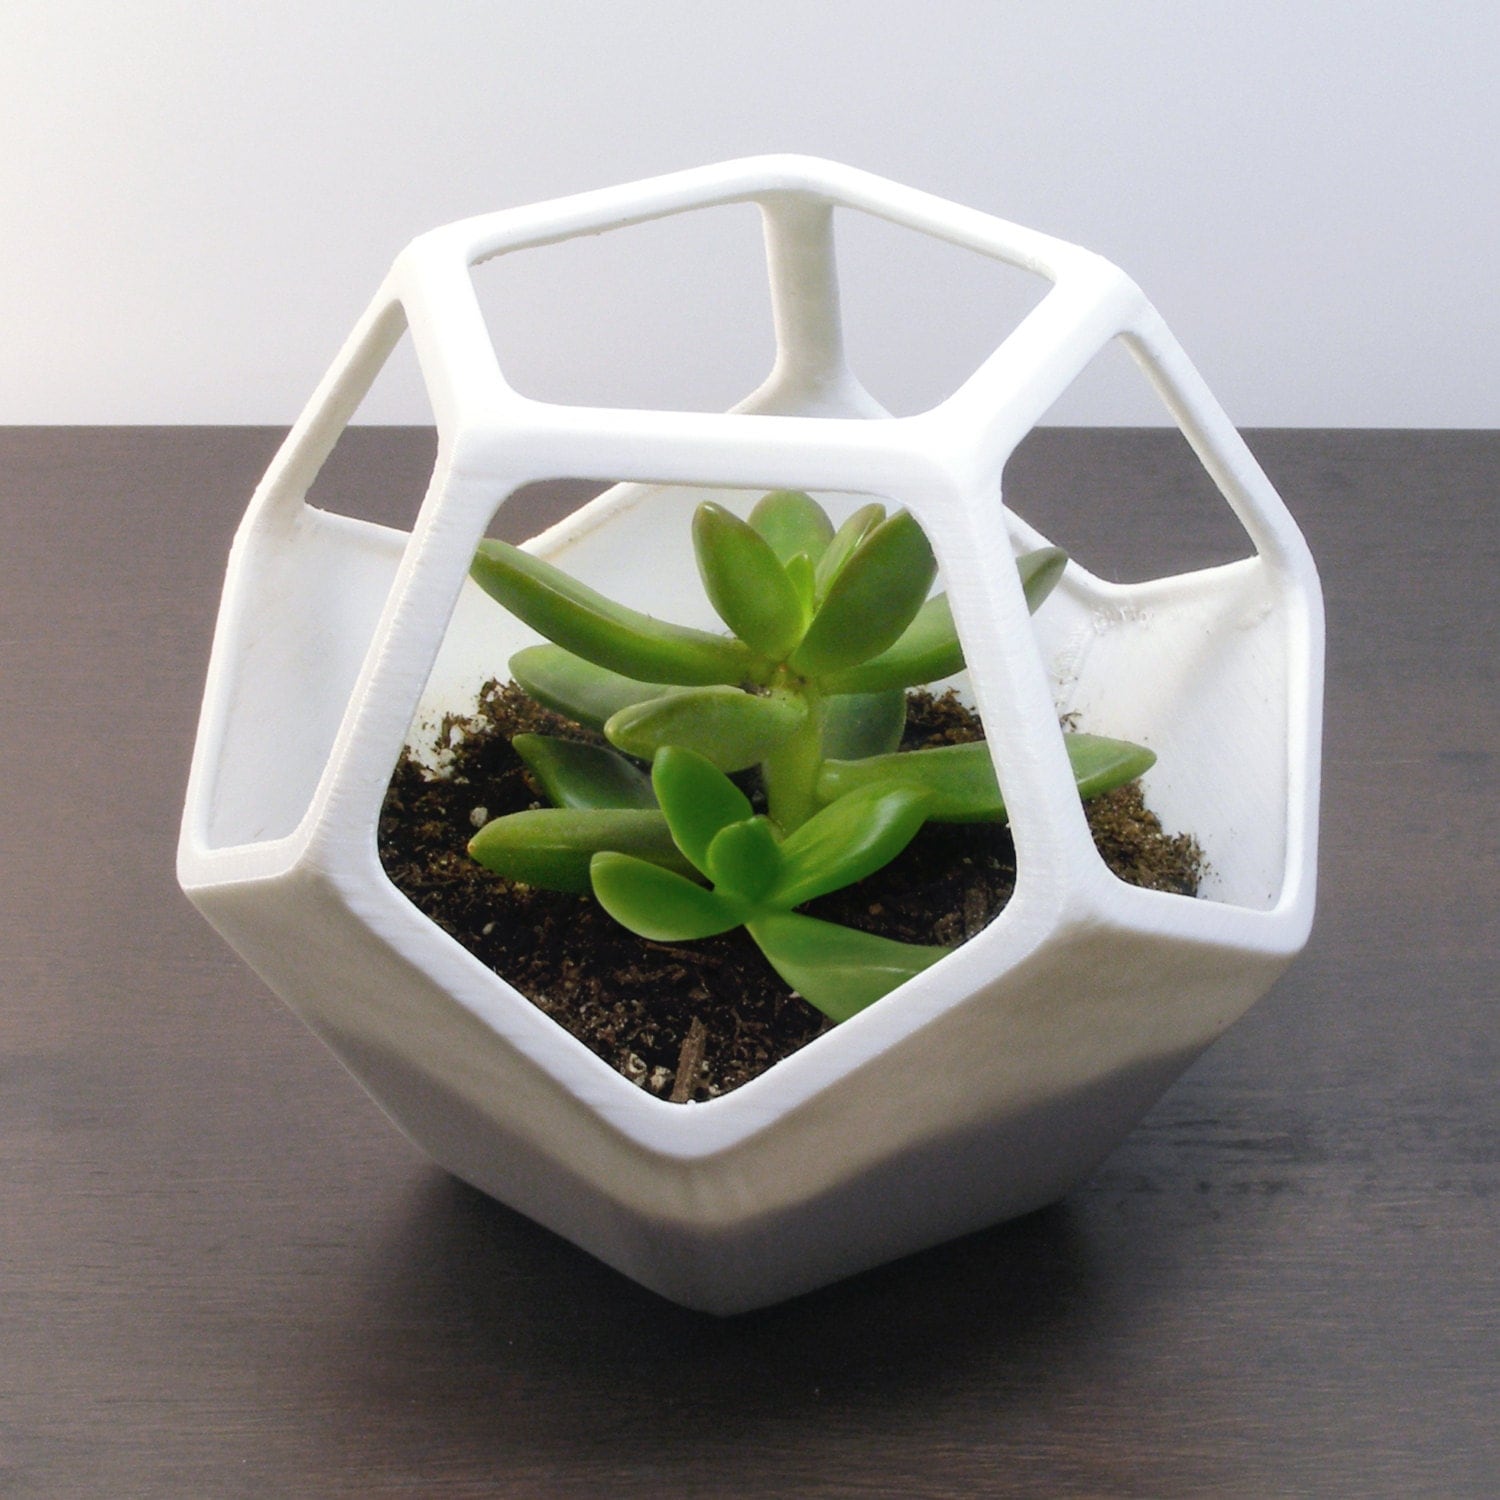 Dodecahedron Planter 3D  Terrarium 3D  Printed  Home by MeshCloud